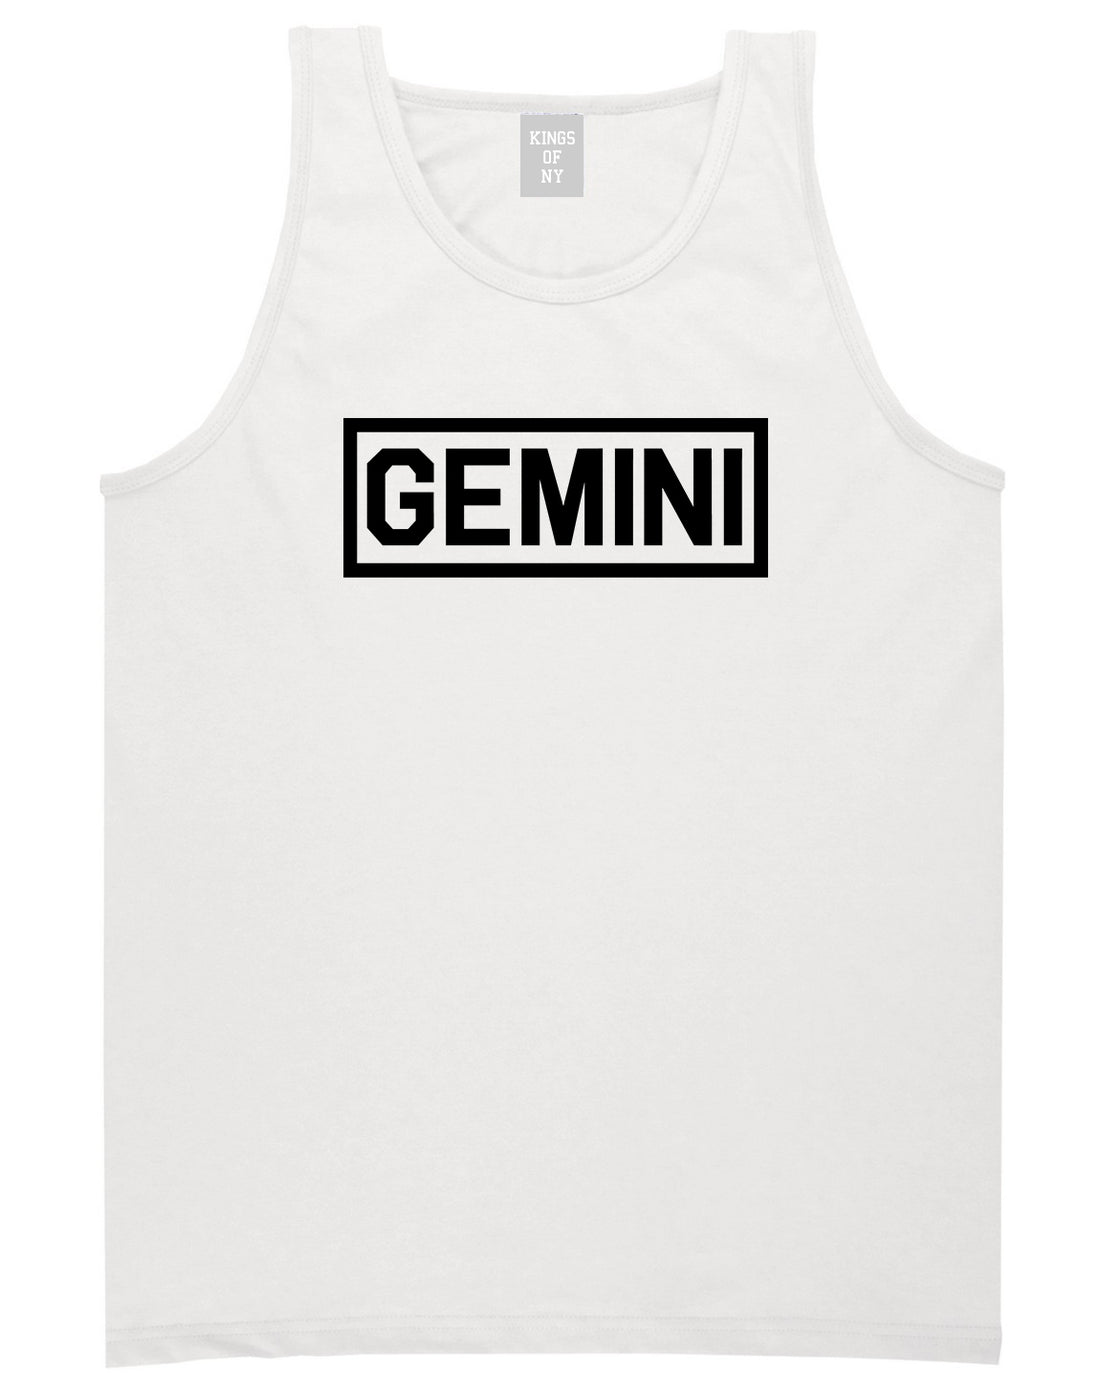 Gemini Horoscope Sign Mens White Tank Top Shirt by KINGS OF NY